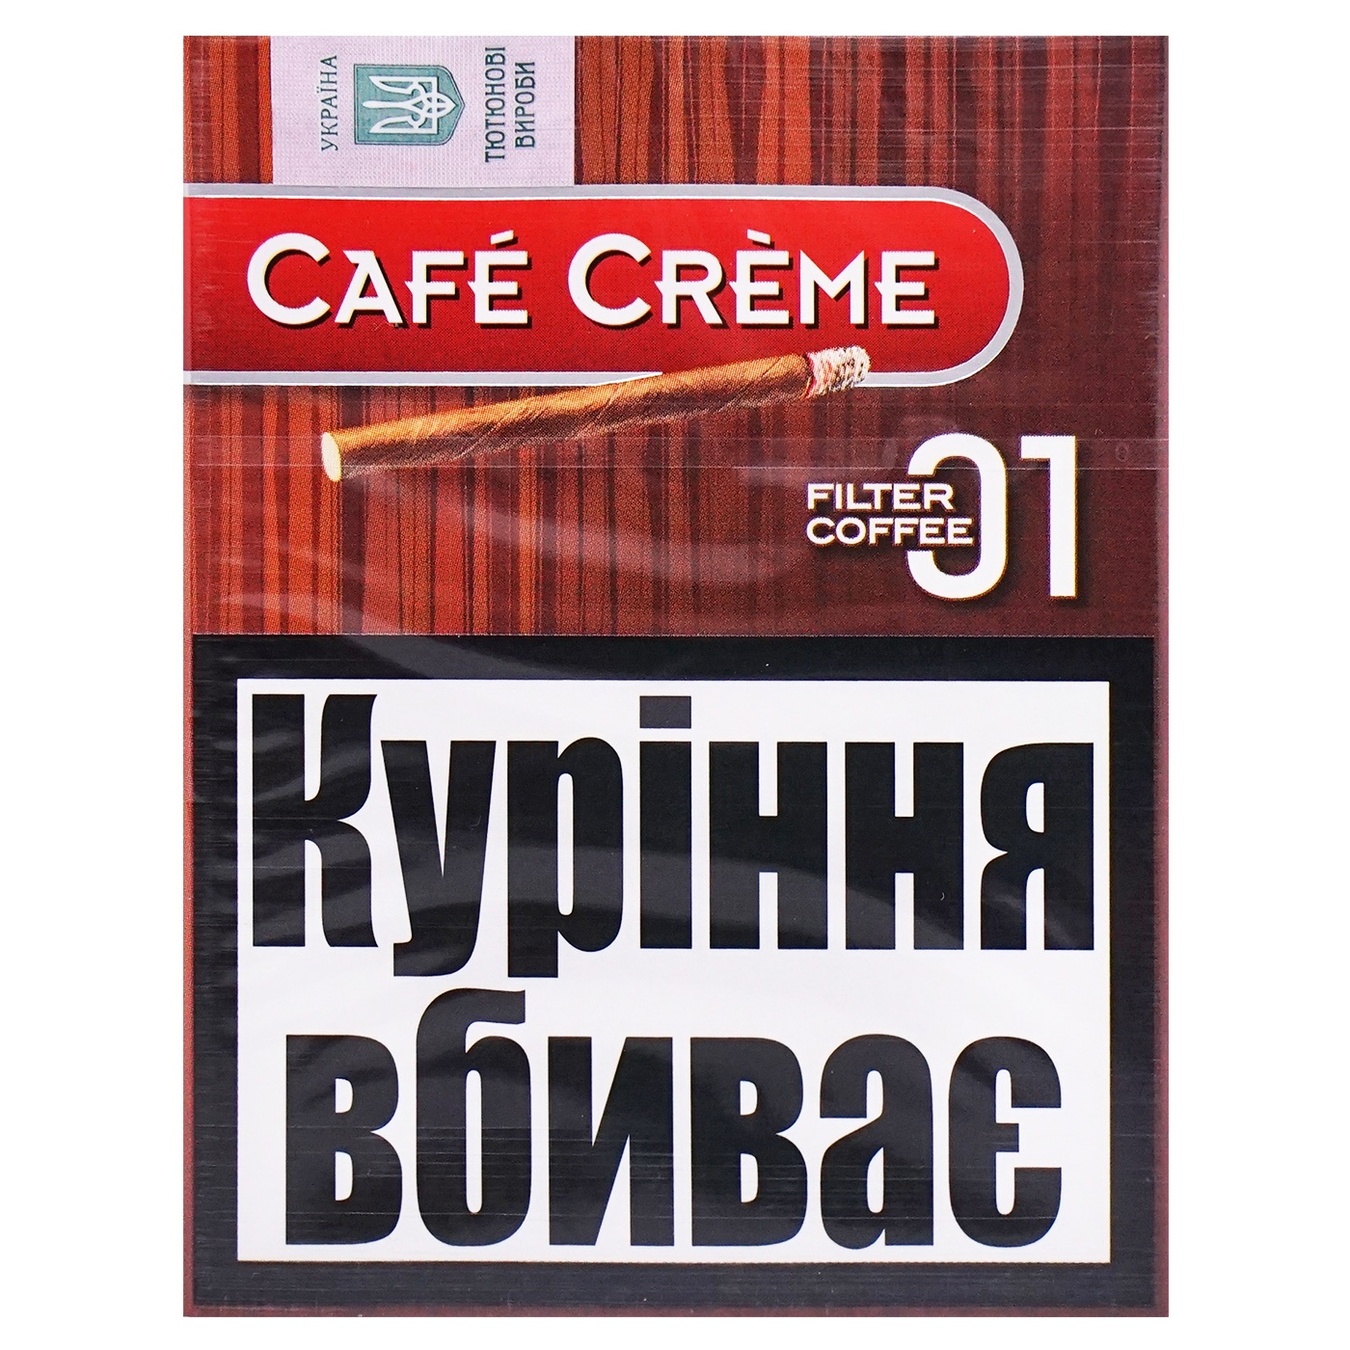 Сигари Cafe Creme filtre 01 coffee 8шт (ціна вказана без акцизу)